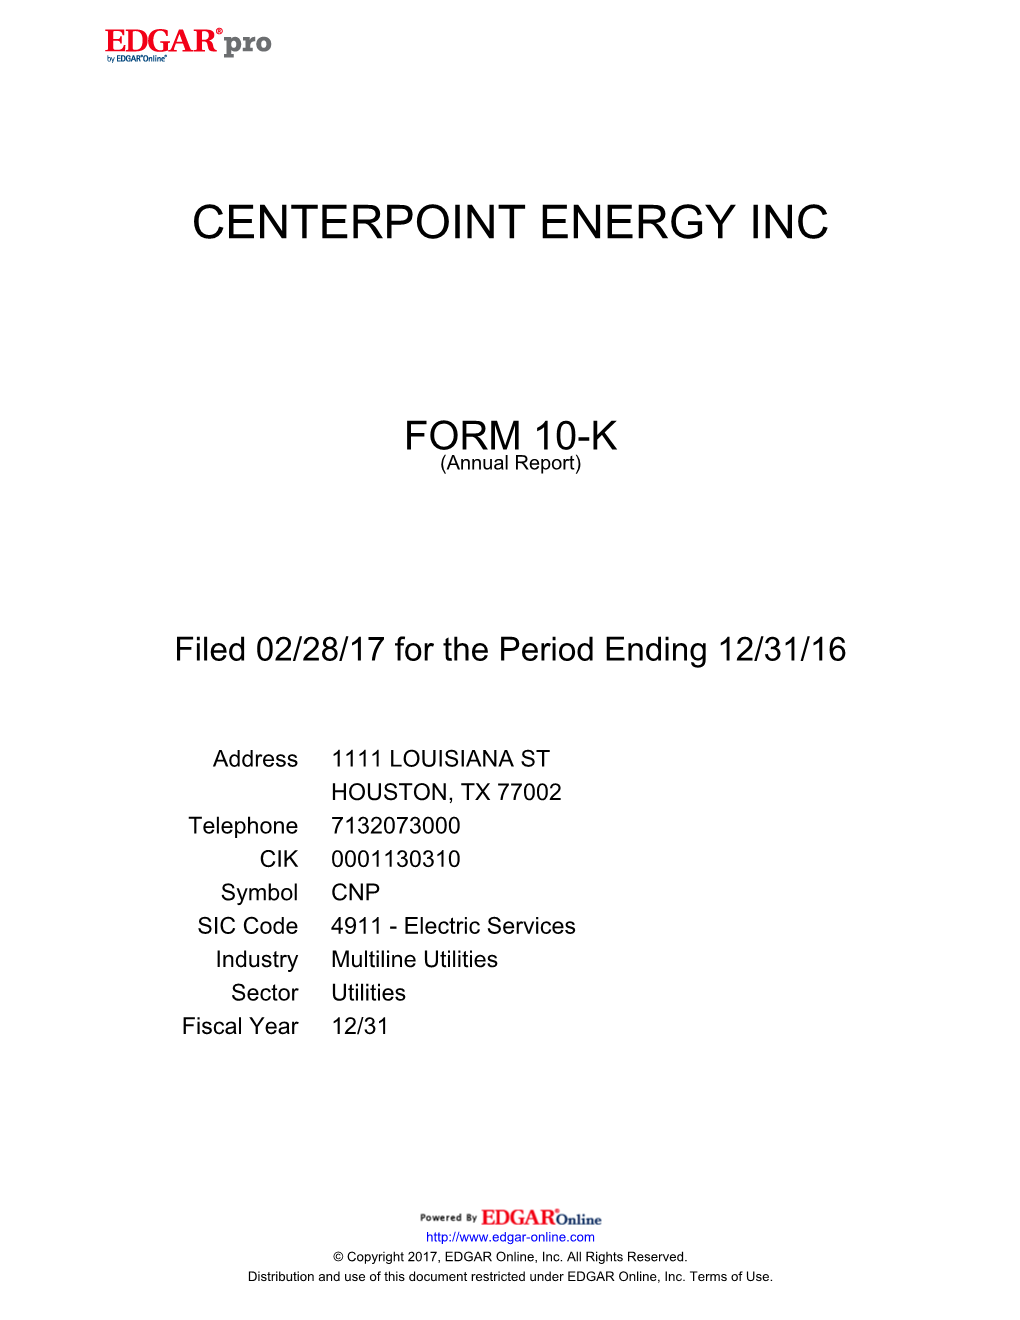 Centerpoint Energy Inc